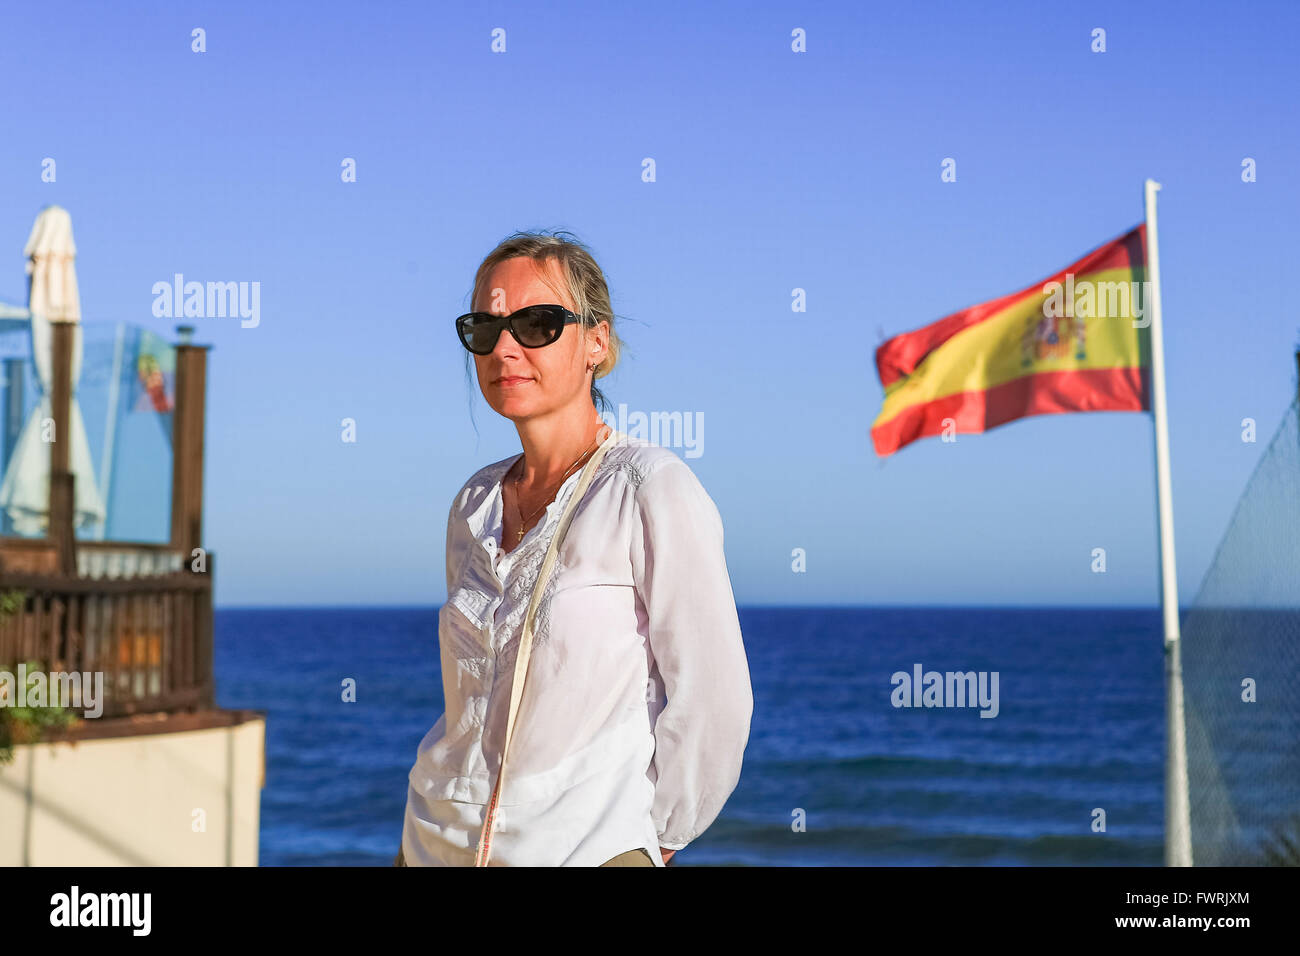 The woman on the Mediterranean coast, Spain Stock Photo